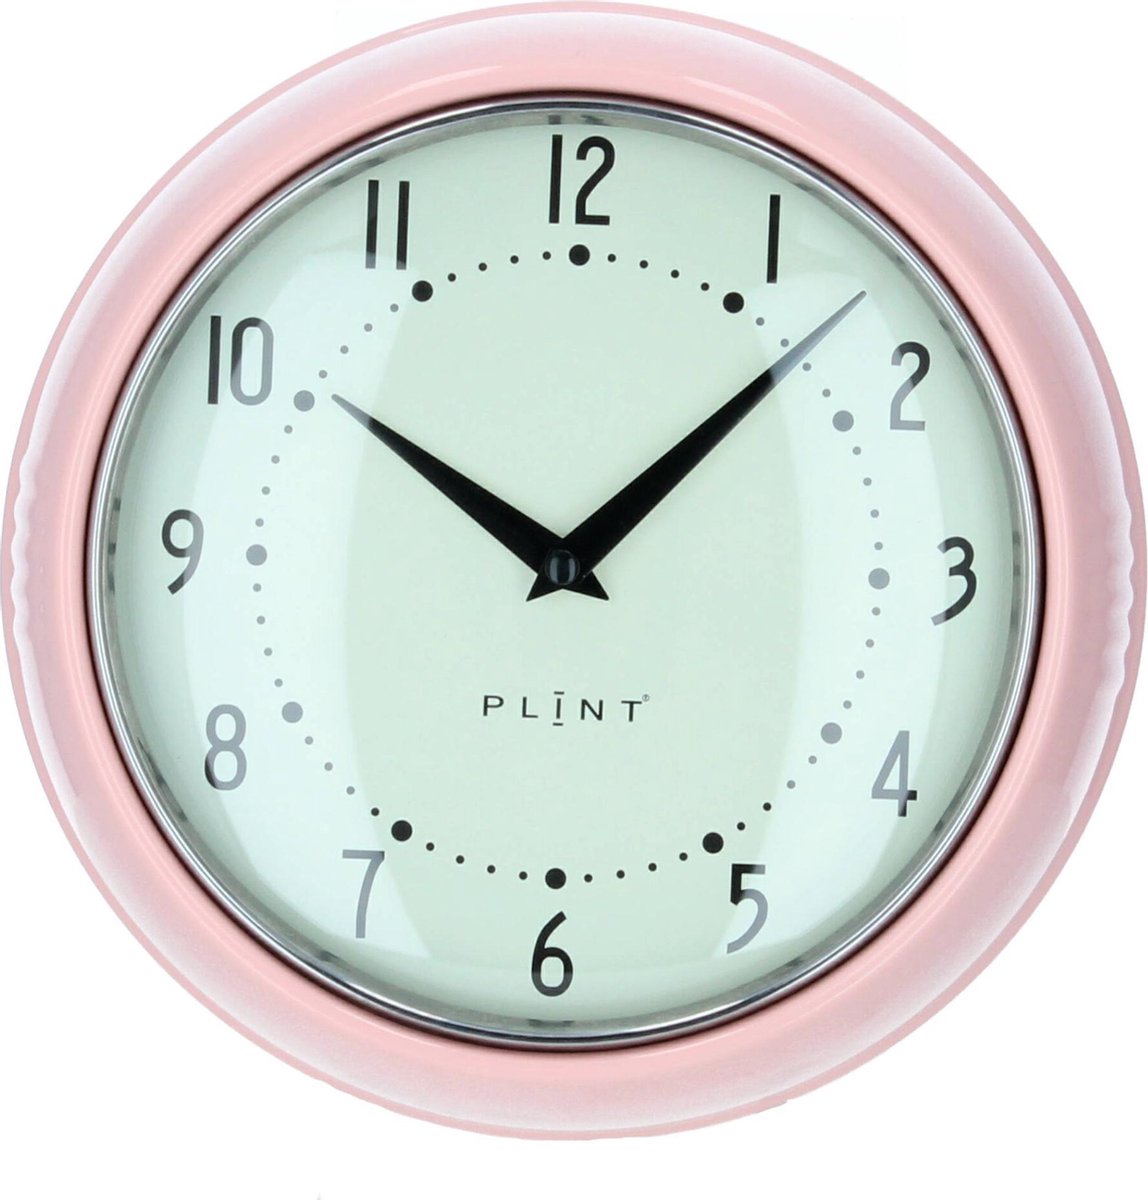 PLINT by Bluetoolz P L I N T Roze Retro wandklok met Quartz uurwerk Drie jaar garantie!!!